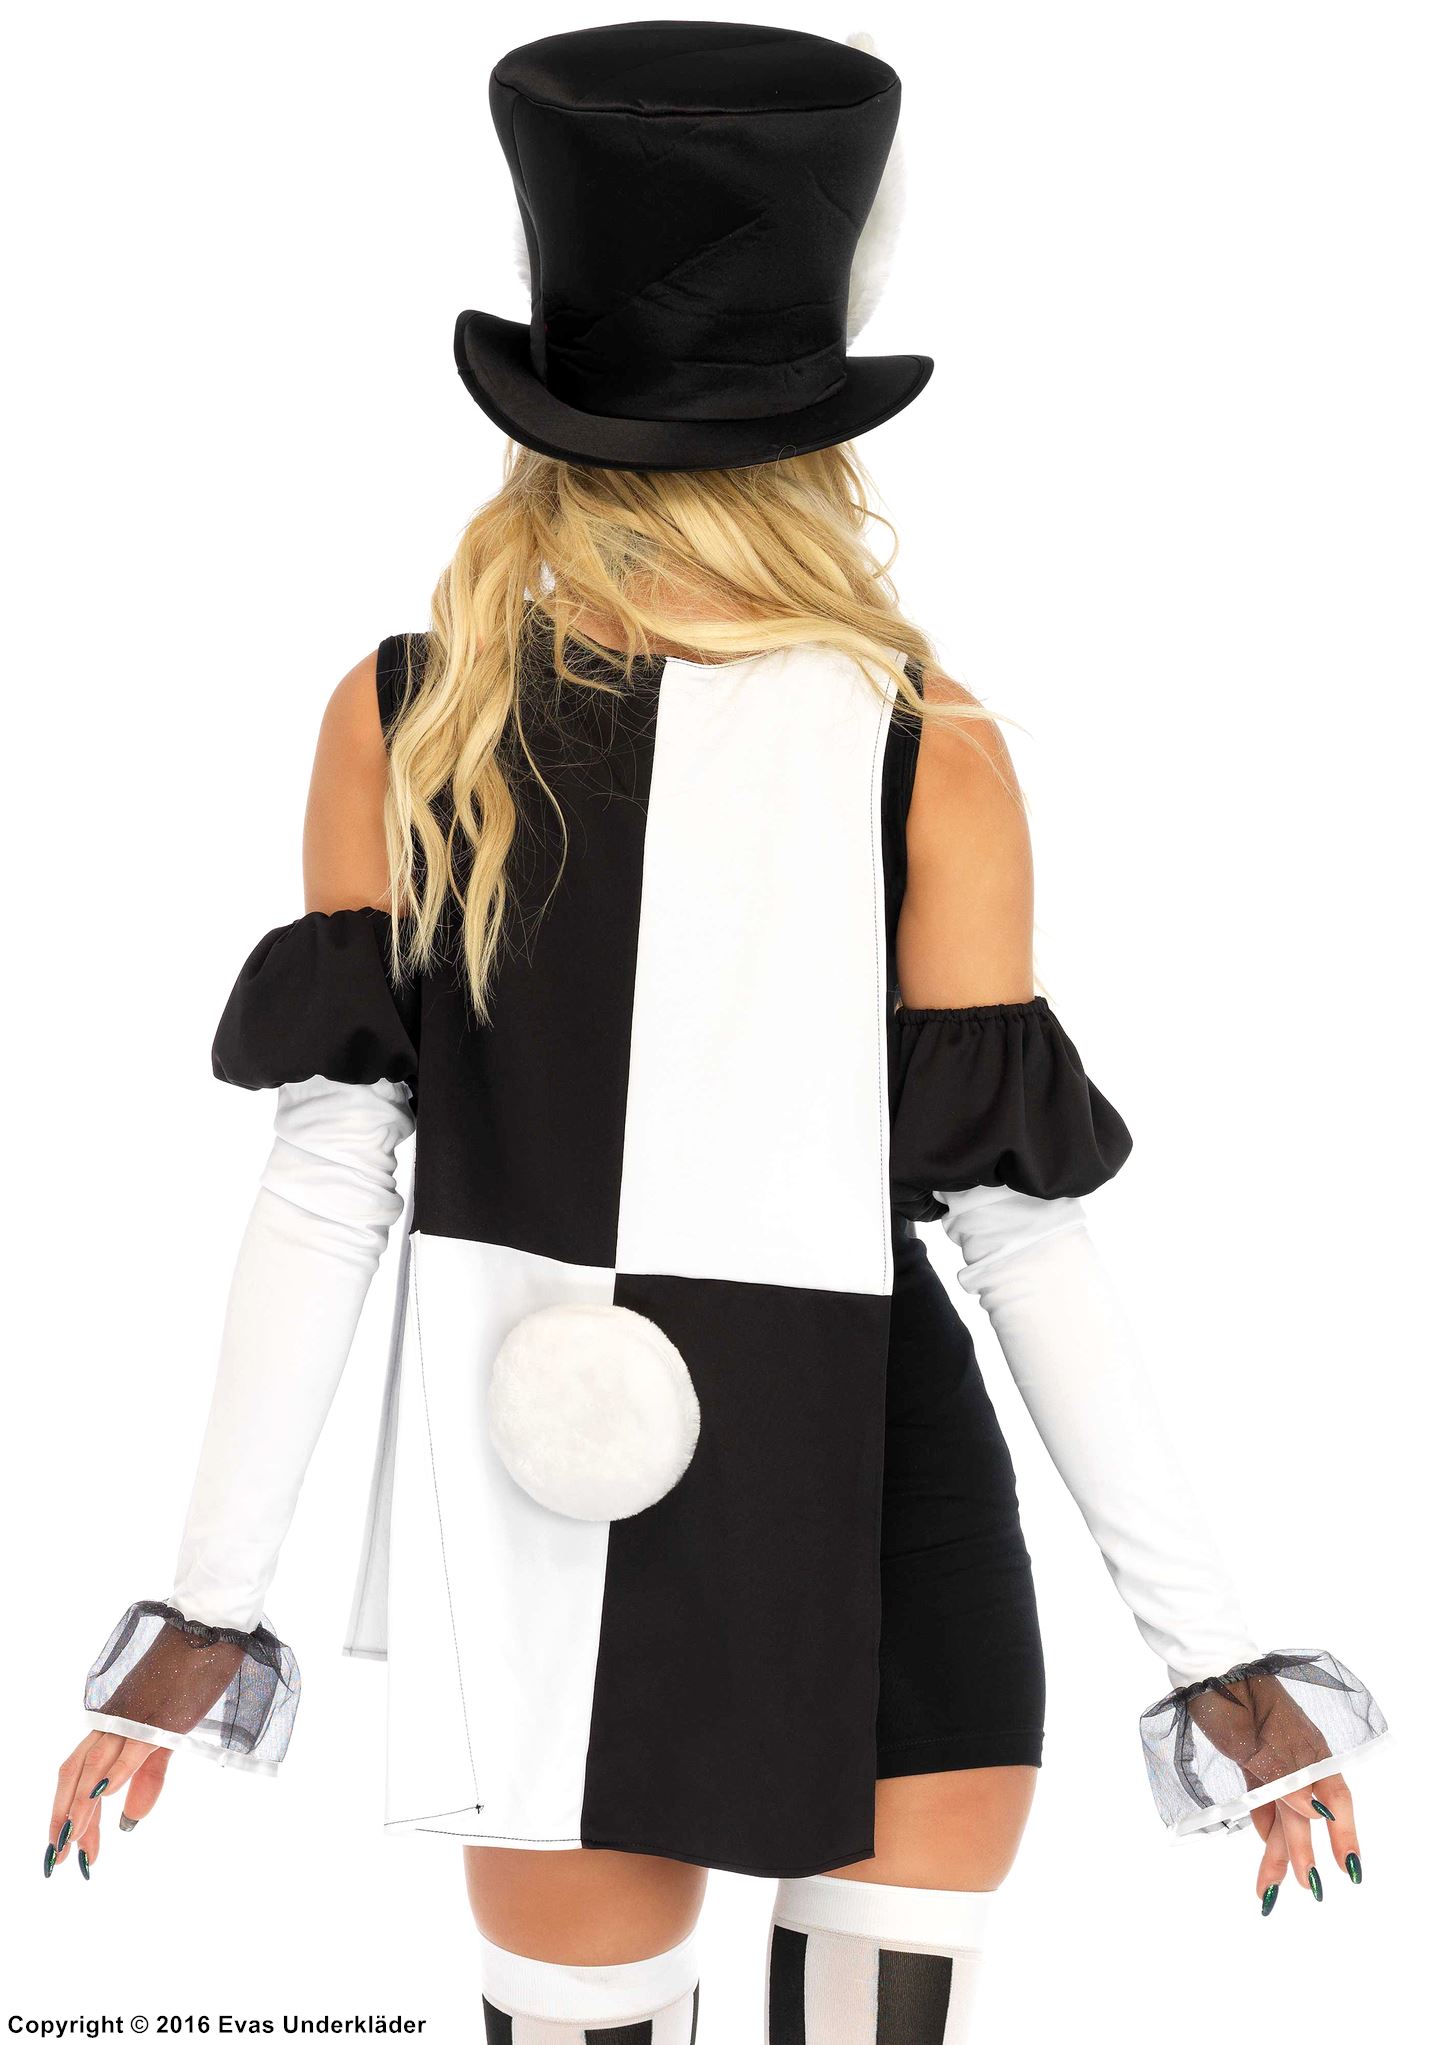 White Rabbit from Alice in Wonderland, costume dress, black and white